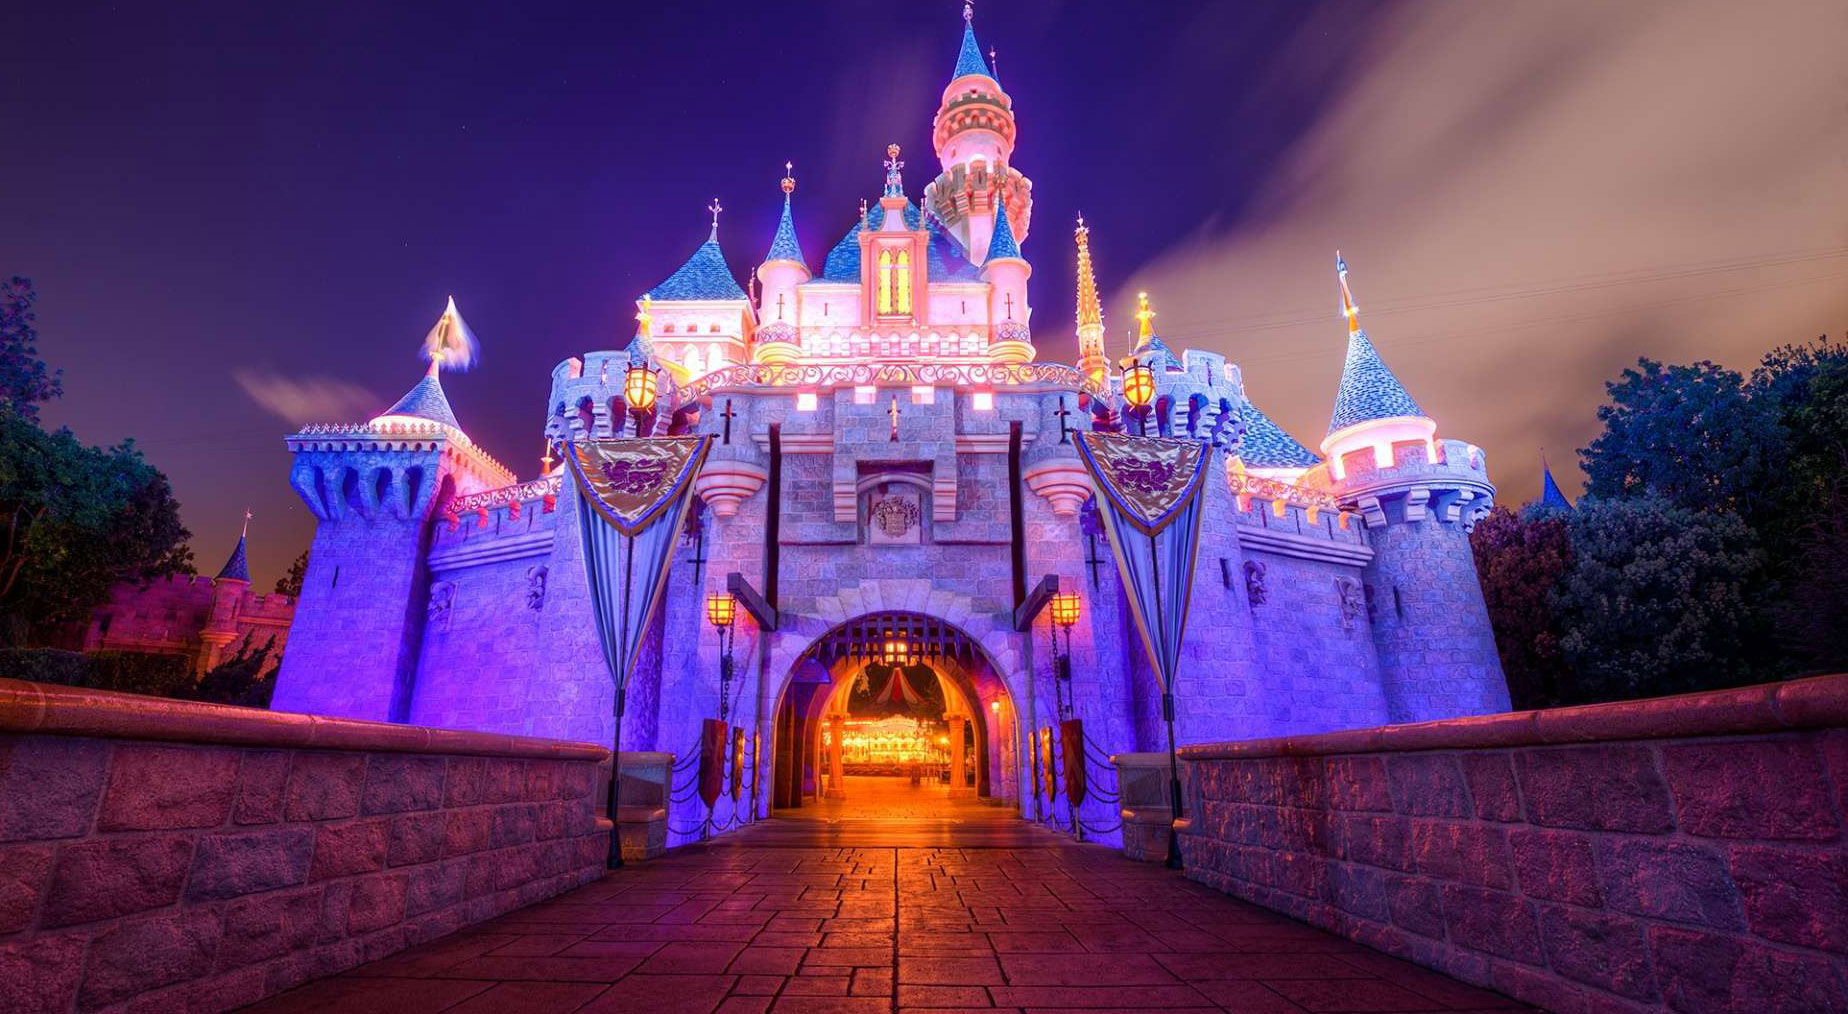 Free Download Disney Castle Backgrounds | PixelsTalk.Net